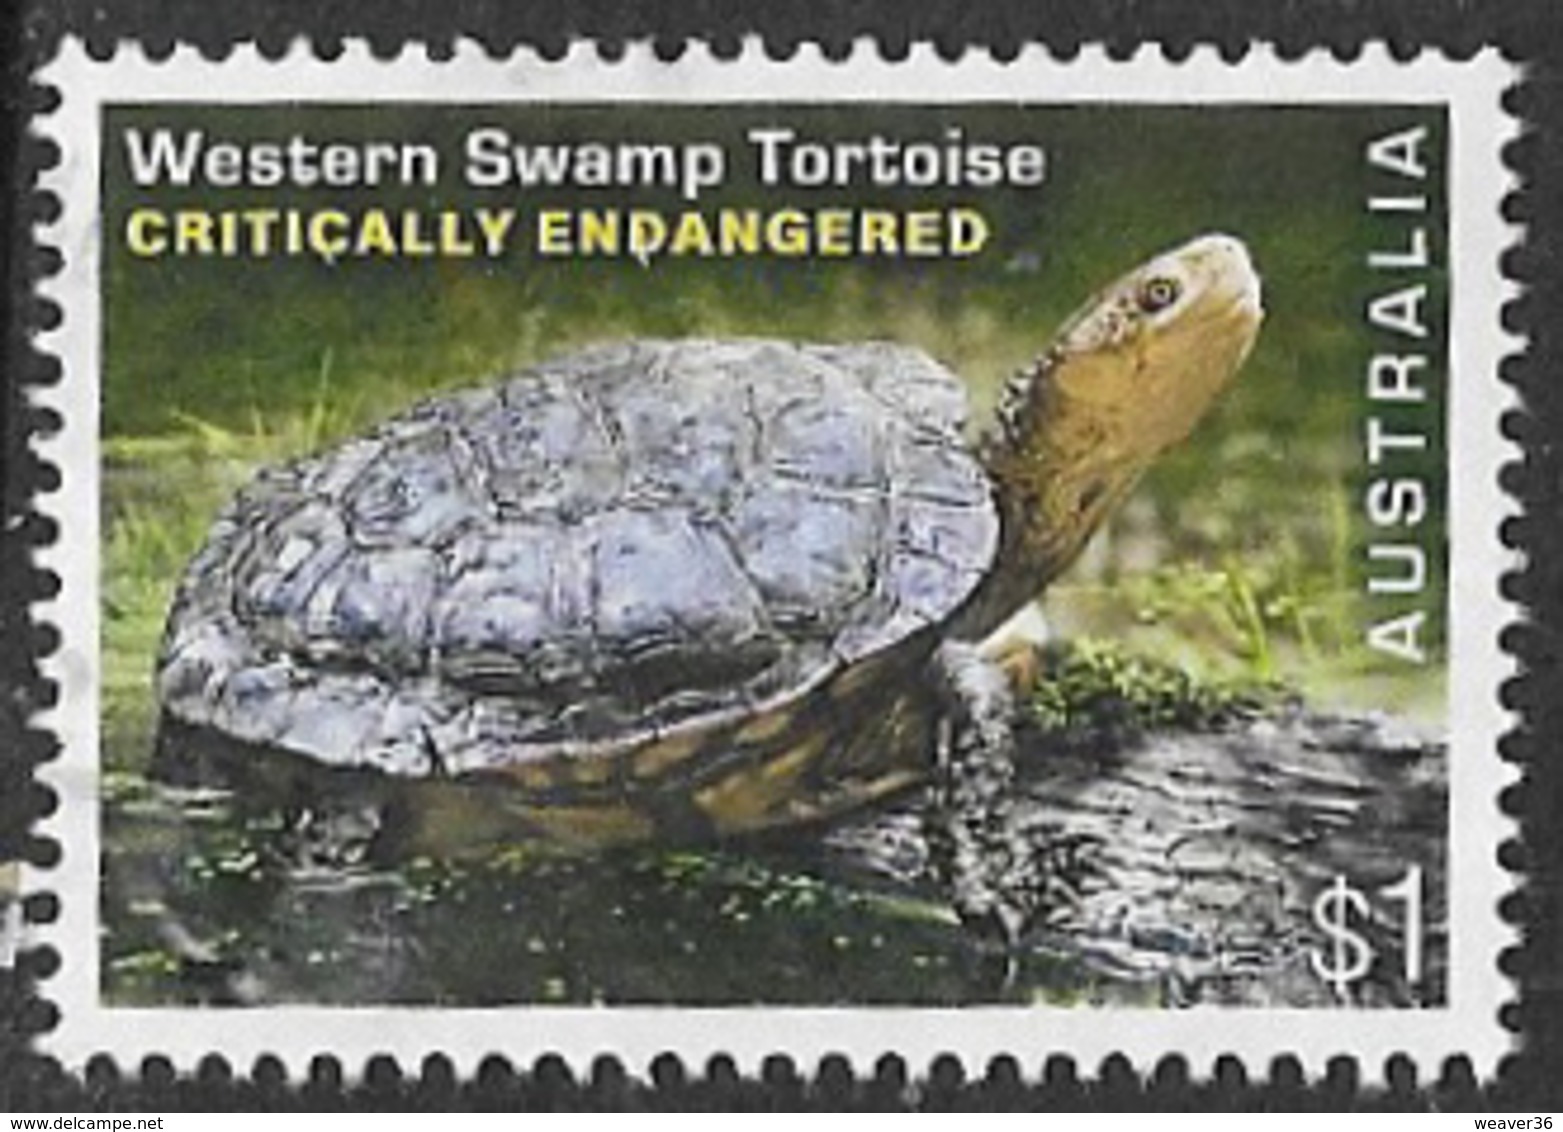 Australia 2016 Endangered Wildlife $1 Type 1 Sheet Stamp Good/fine Used [37/31126/ND] - Used Stamps